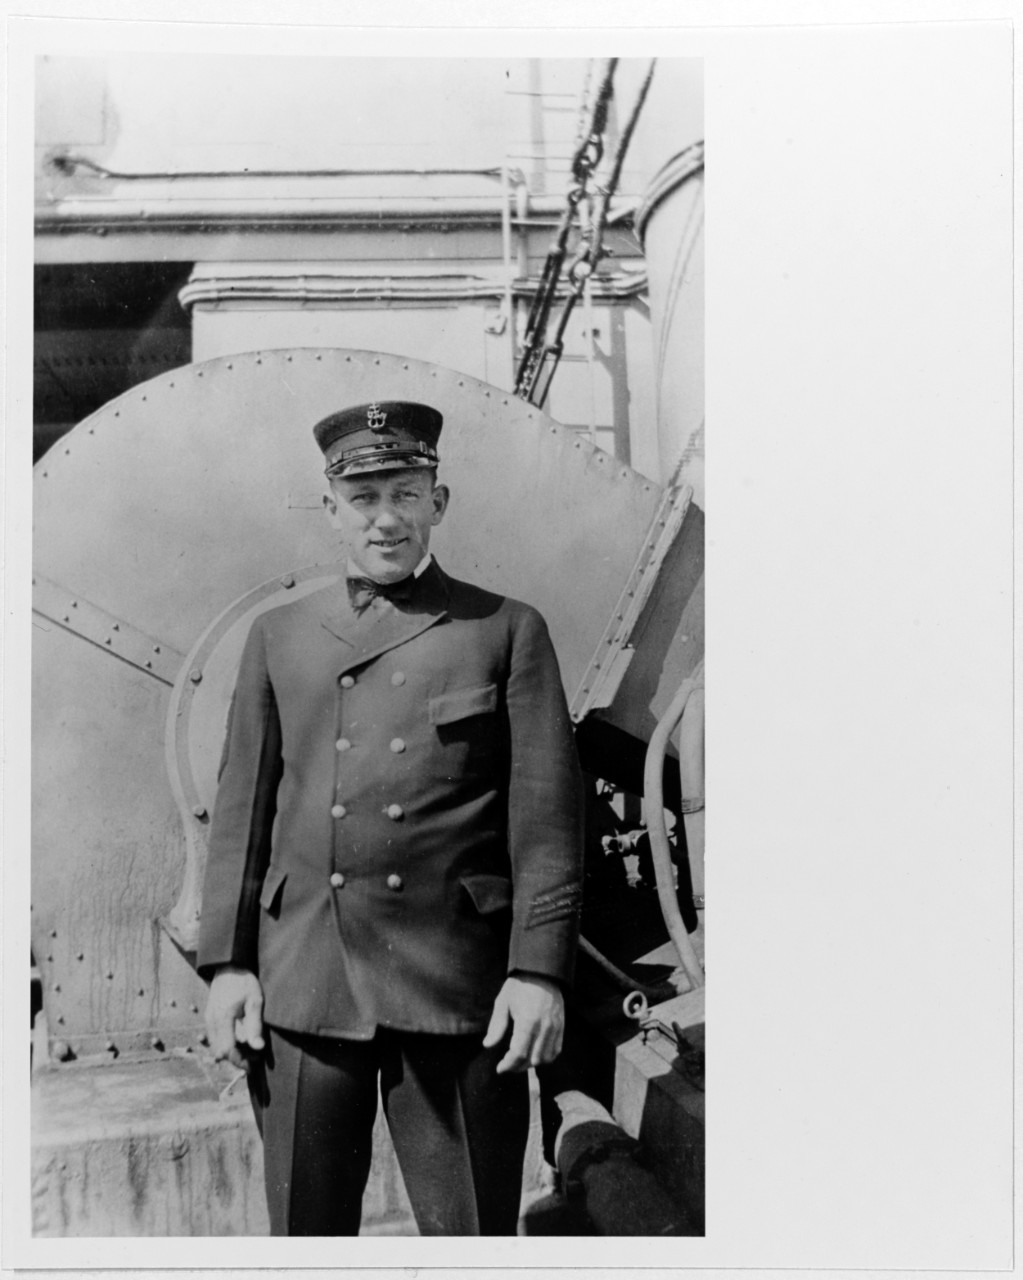 Gardiner Conoven, Chief Boatswain's Mate, USN